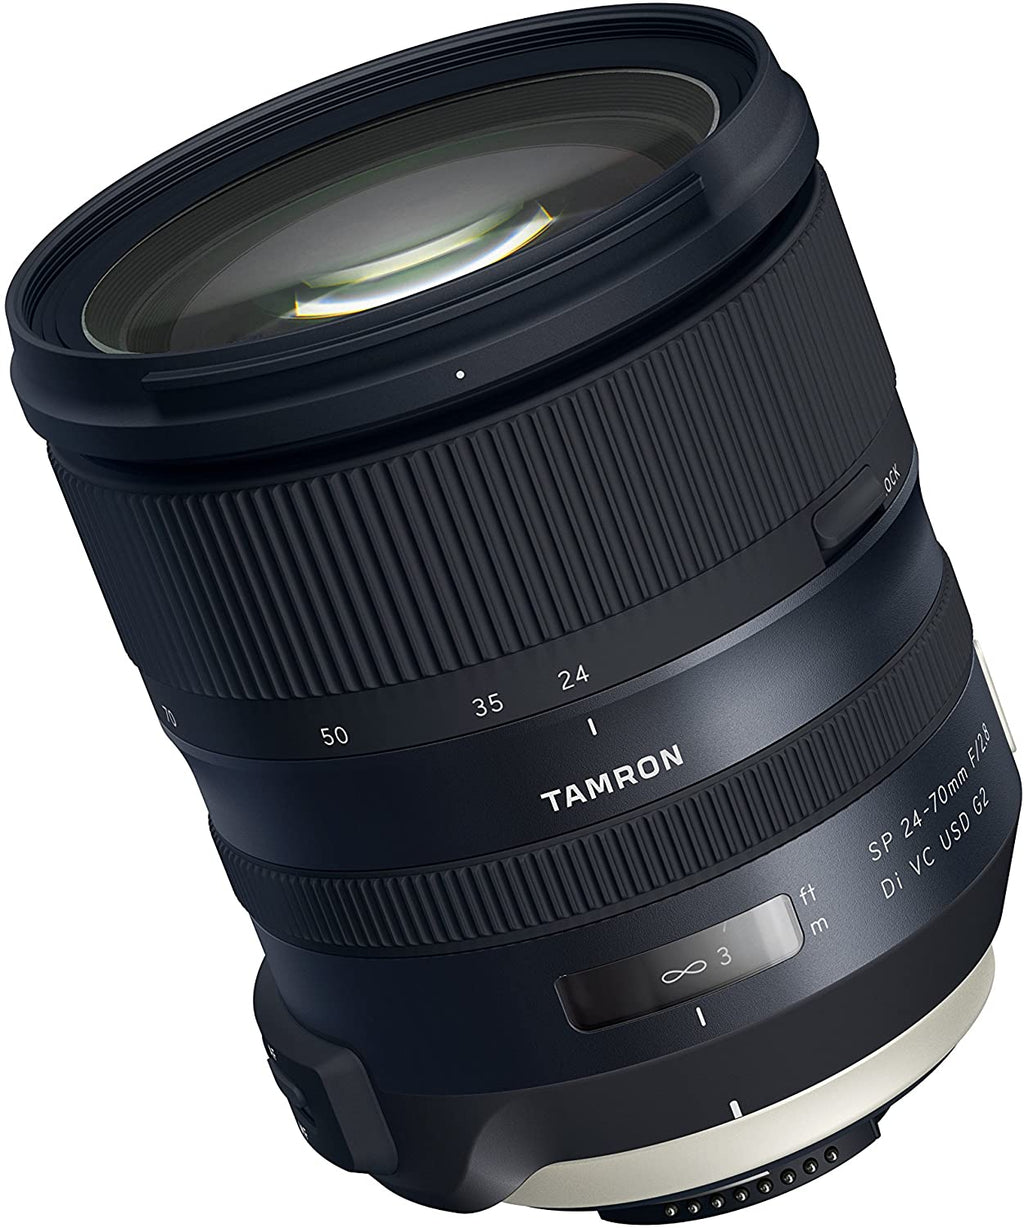 Detec™ Tamron 24-70mm F/2.8 G2 Di VC USD G2 Zoom Lens for Nikon Mount